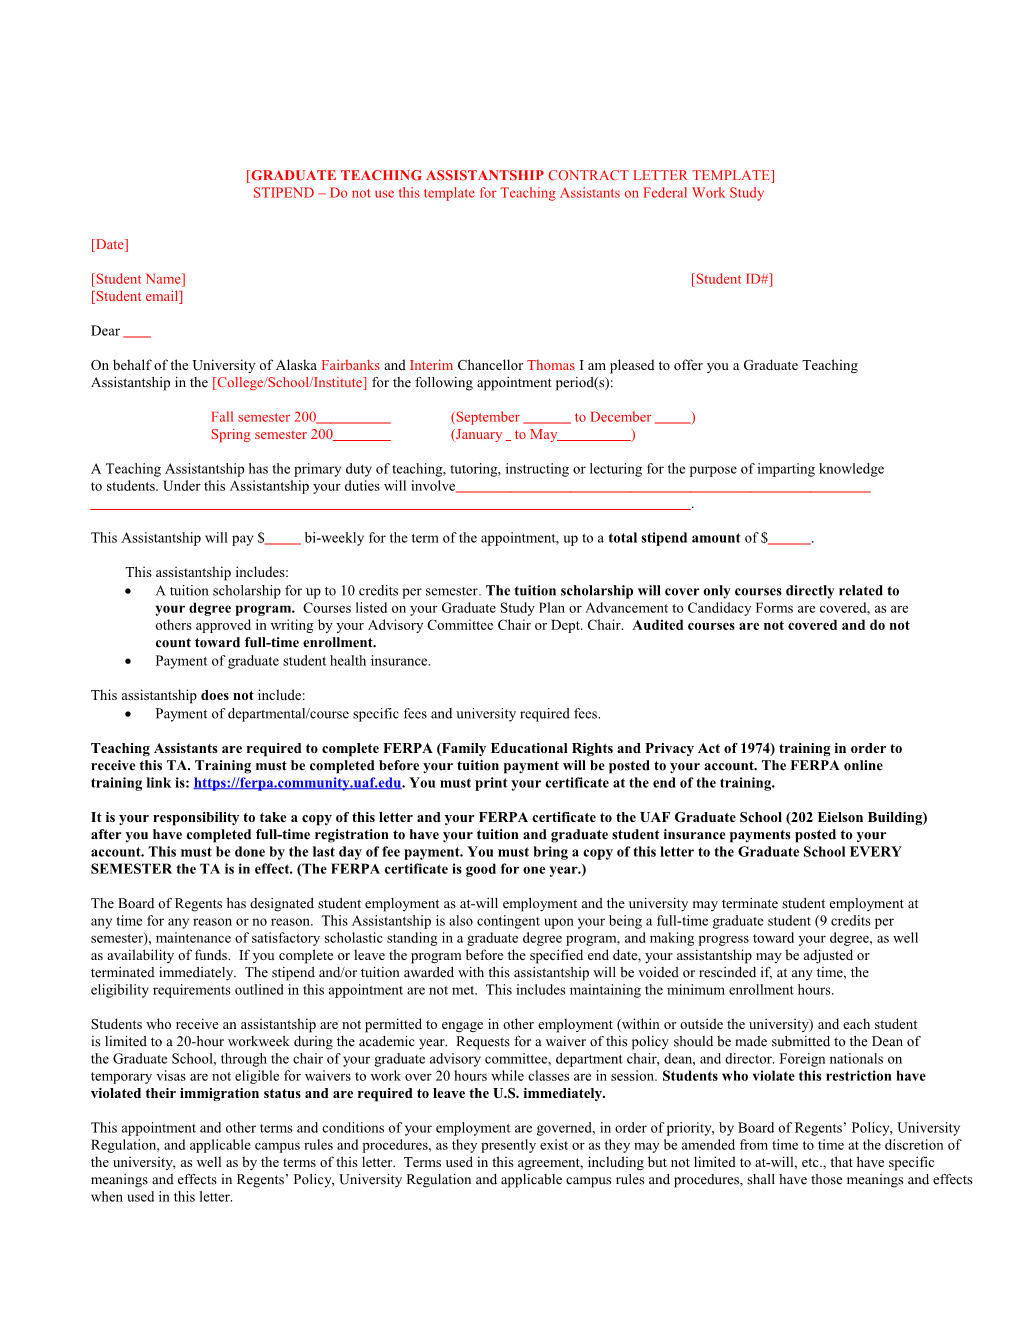 Draft Graduate Assistantship Contract Letter (2/13/05)